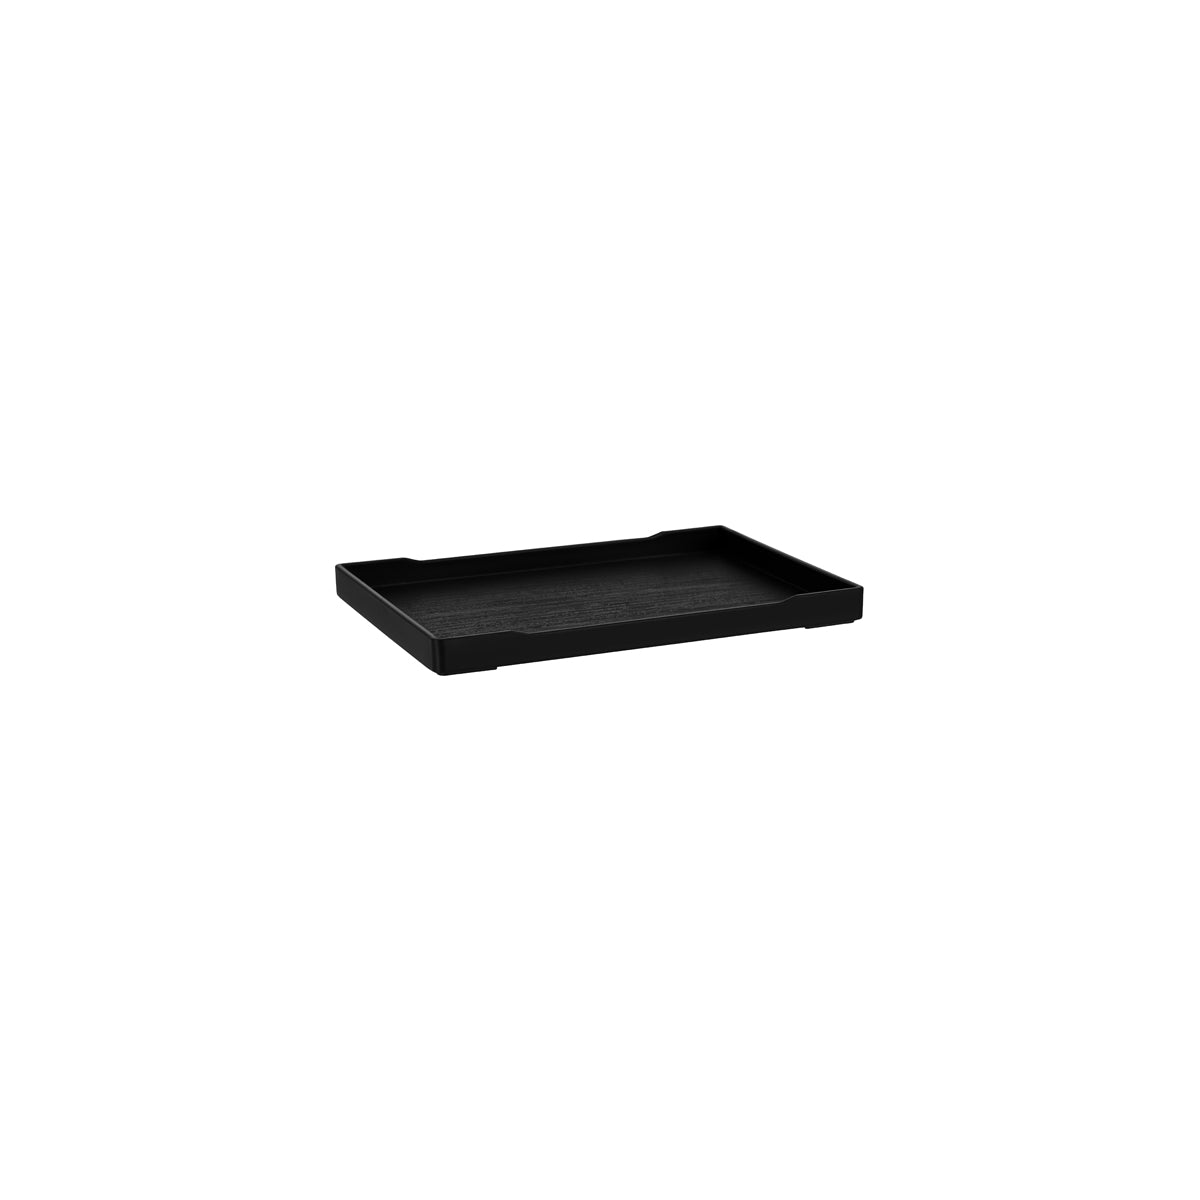 9000-100 Noble & Price Inroom Amenity Tray Black 245x180x20mm Tomkin Australia Hospitality Supplies